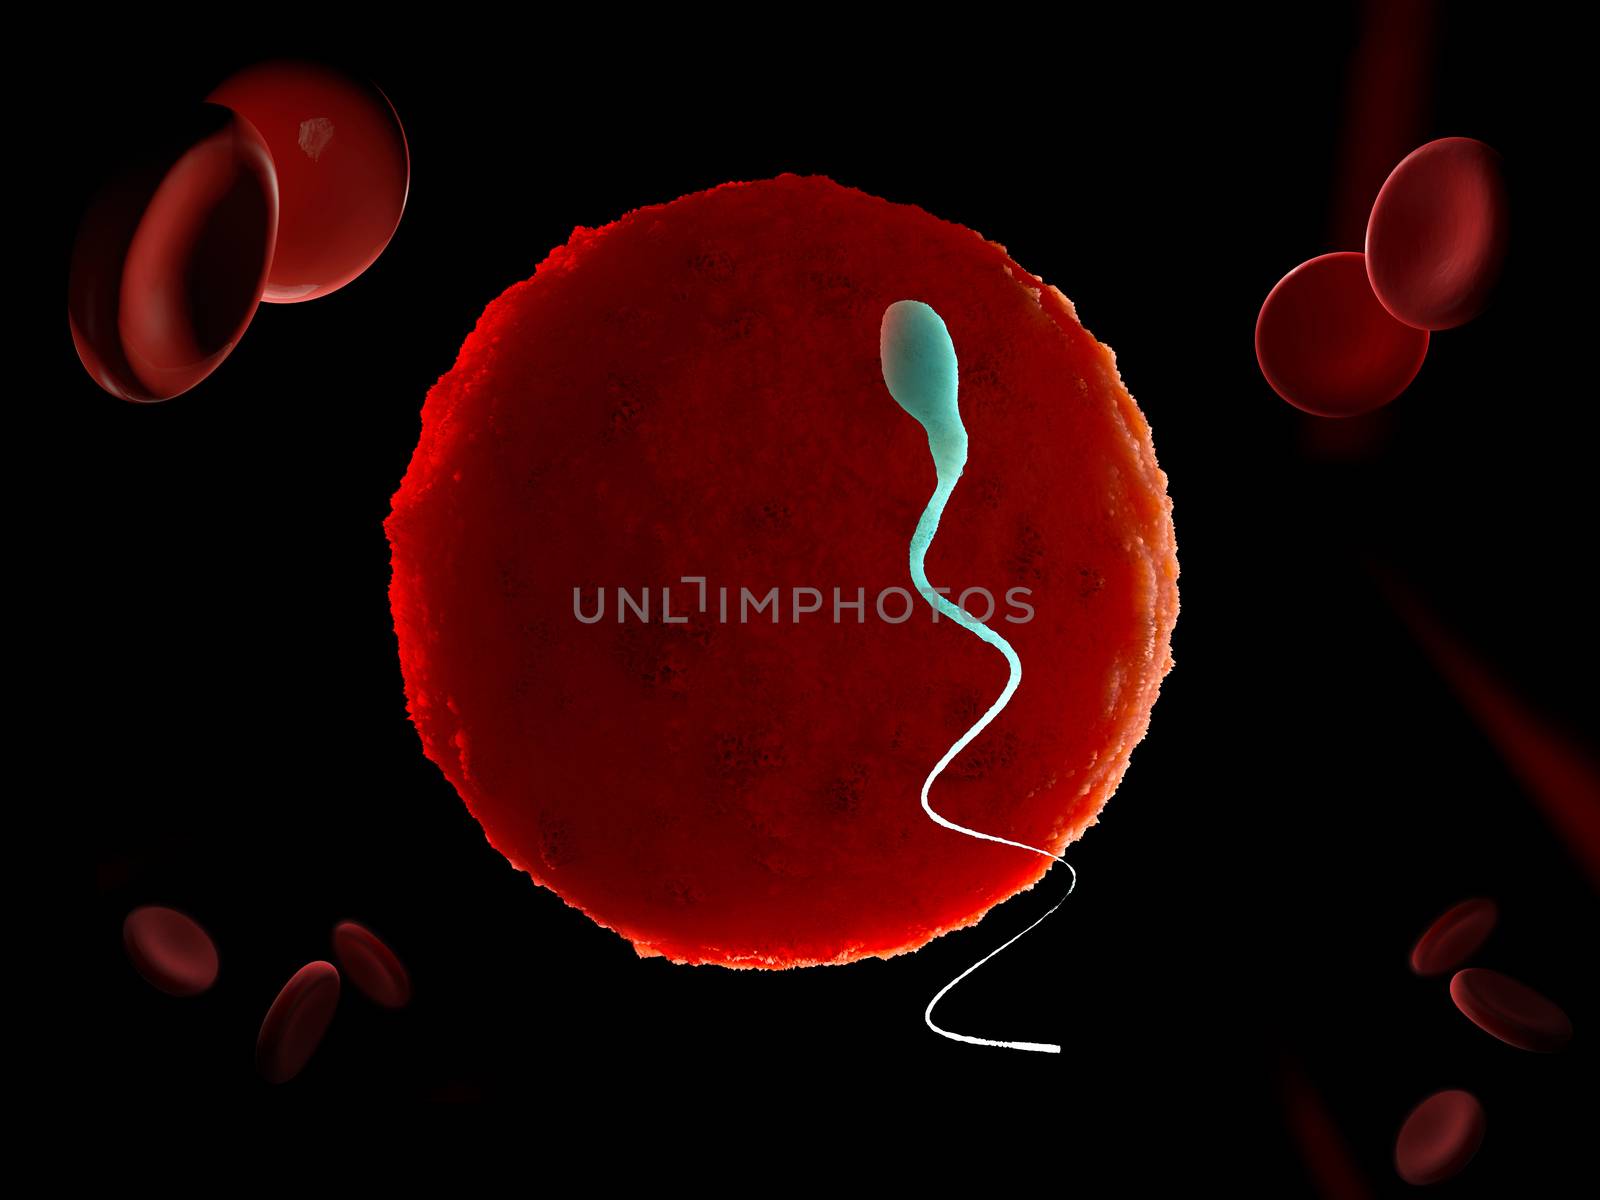 Sperm and egg cell. Natural fertilization. 3d illustration on black background by tussik